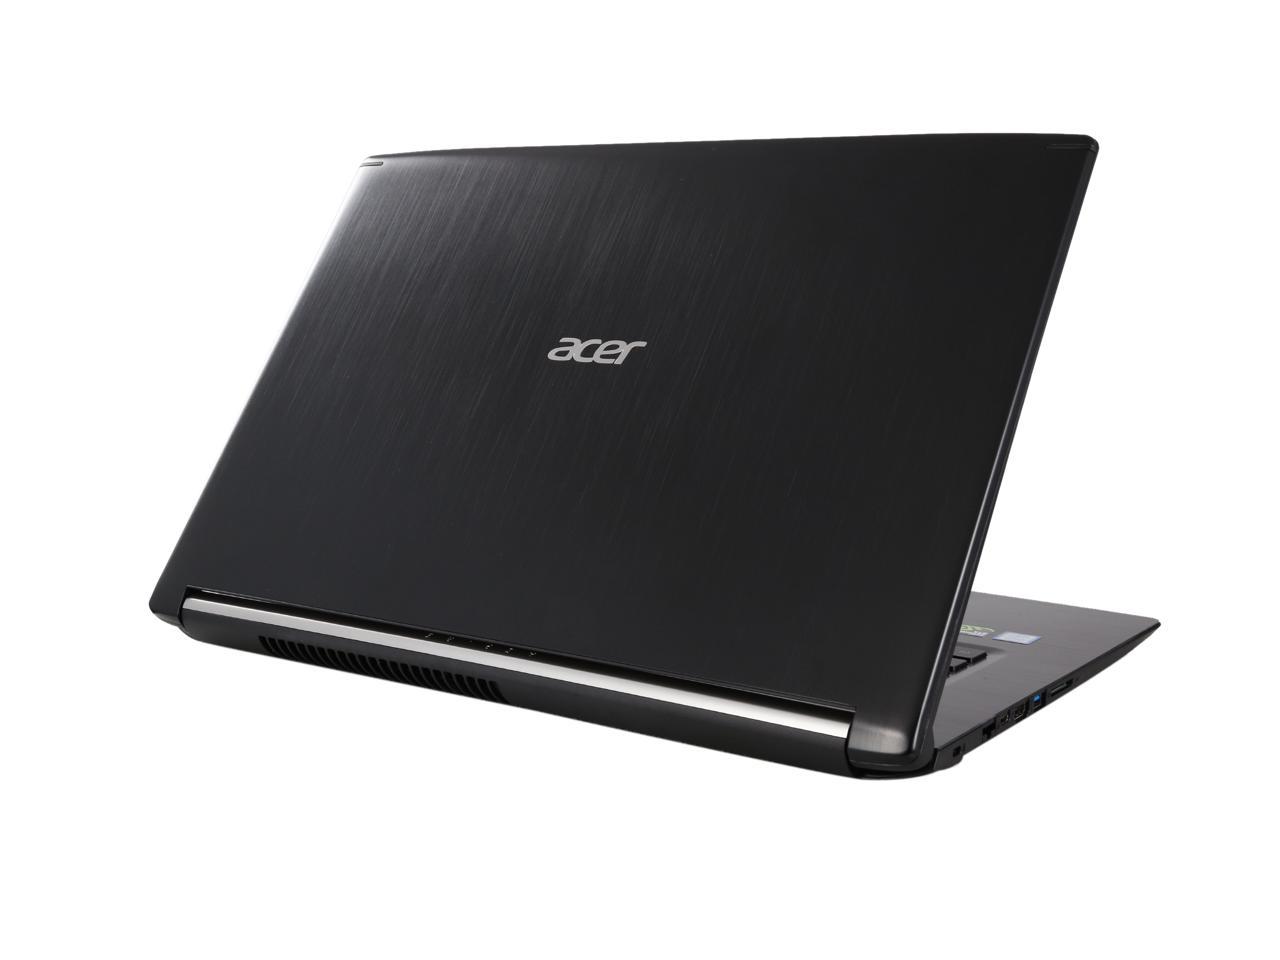 Acer Gaming Laptop 17 3 Fhd Ips 60 Hz Intel I7 8750h Nvidia Geforce Gtx 1060 6 Gb Gddr5 16 Gb Memory 256 Gb Ssd Windows 10 Home Vr Ready Aspire 7 A717 72g 700j Only Newegg Newegg Com